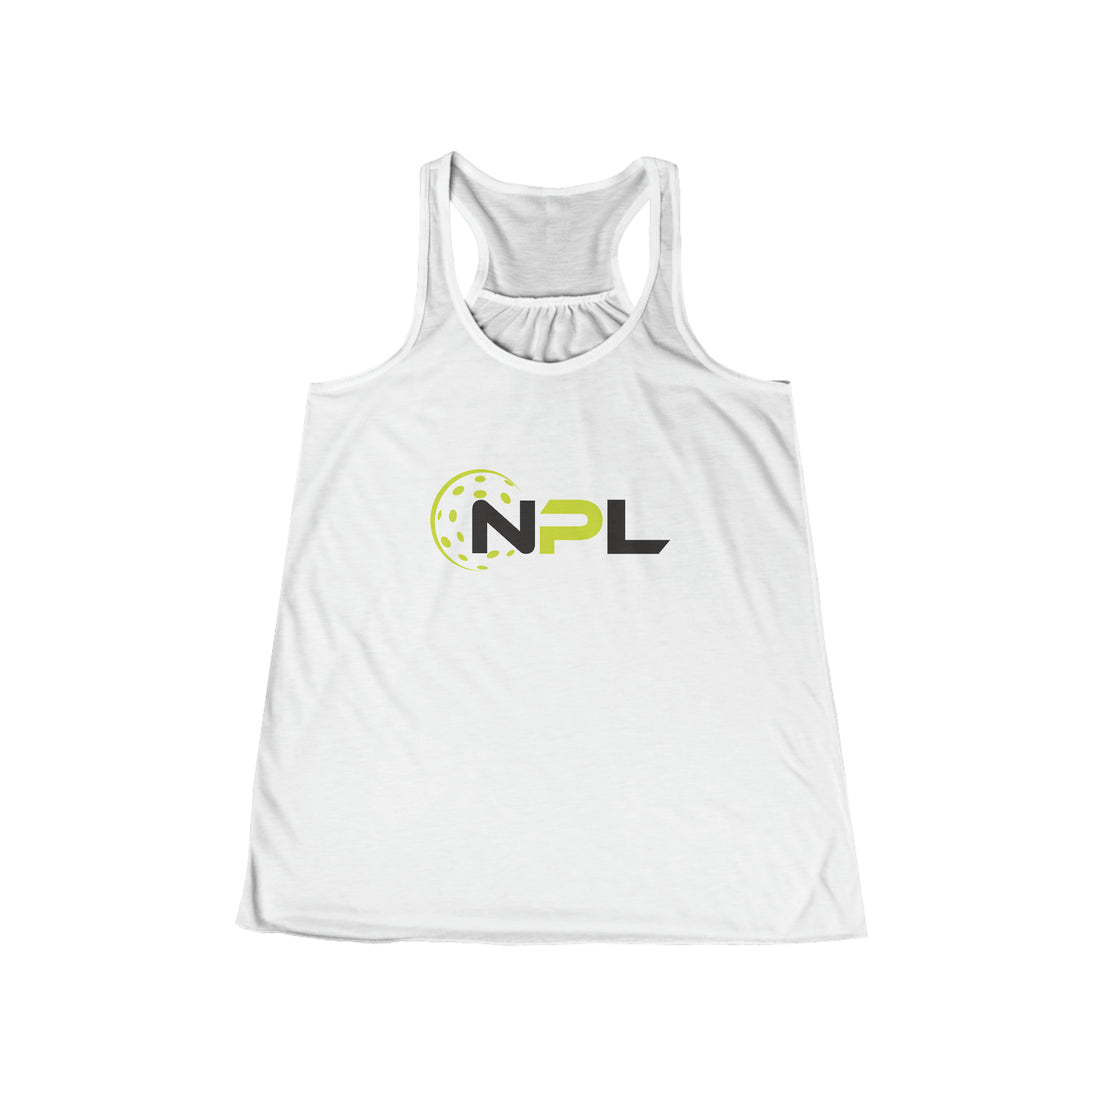 "NPL™ Women's Flowy Racerback Tank: Show Your Support in Style!"